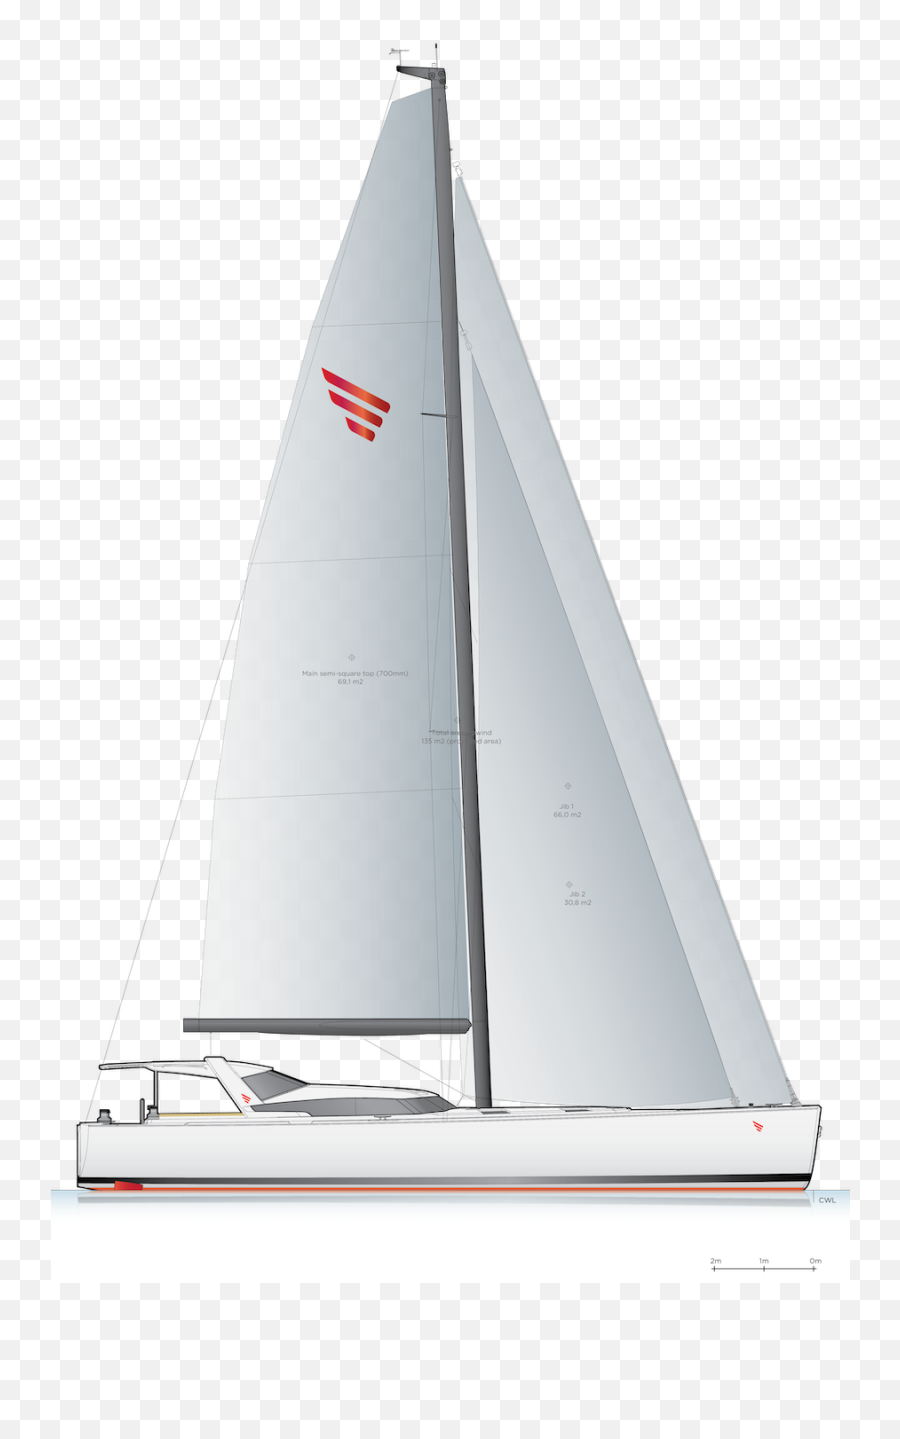 Pegasus Yachts - Pegasus Yachts Sail Png,Sailboat Transparent Background